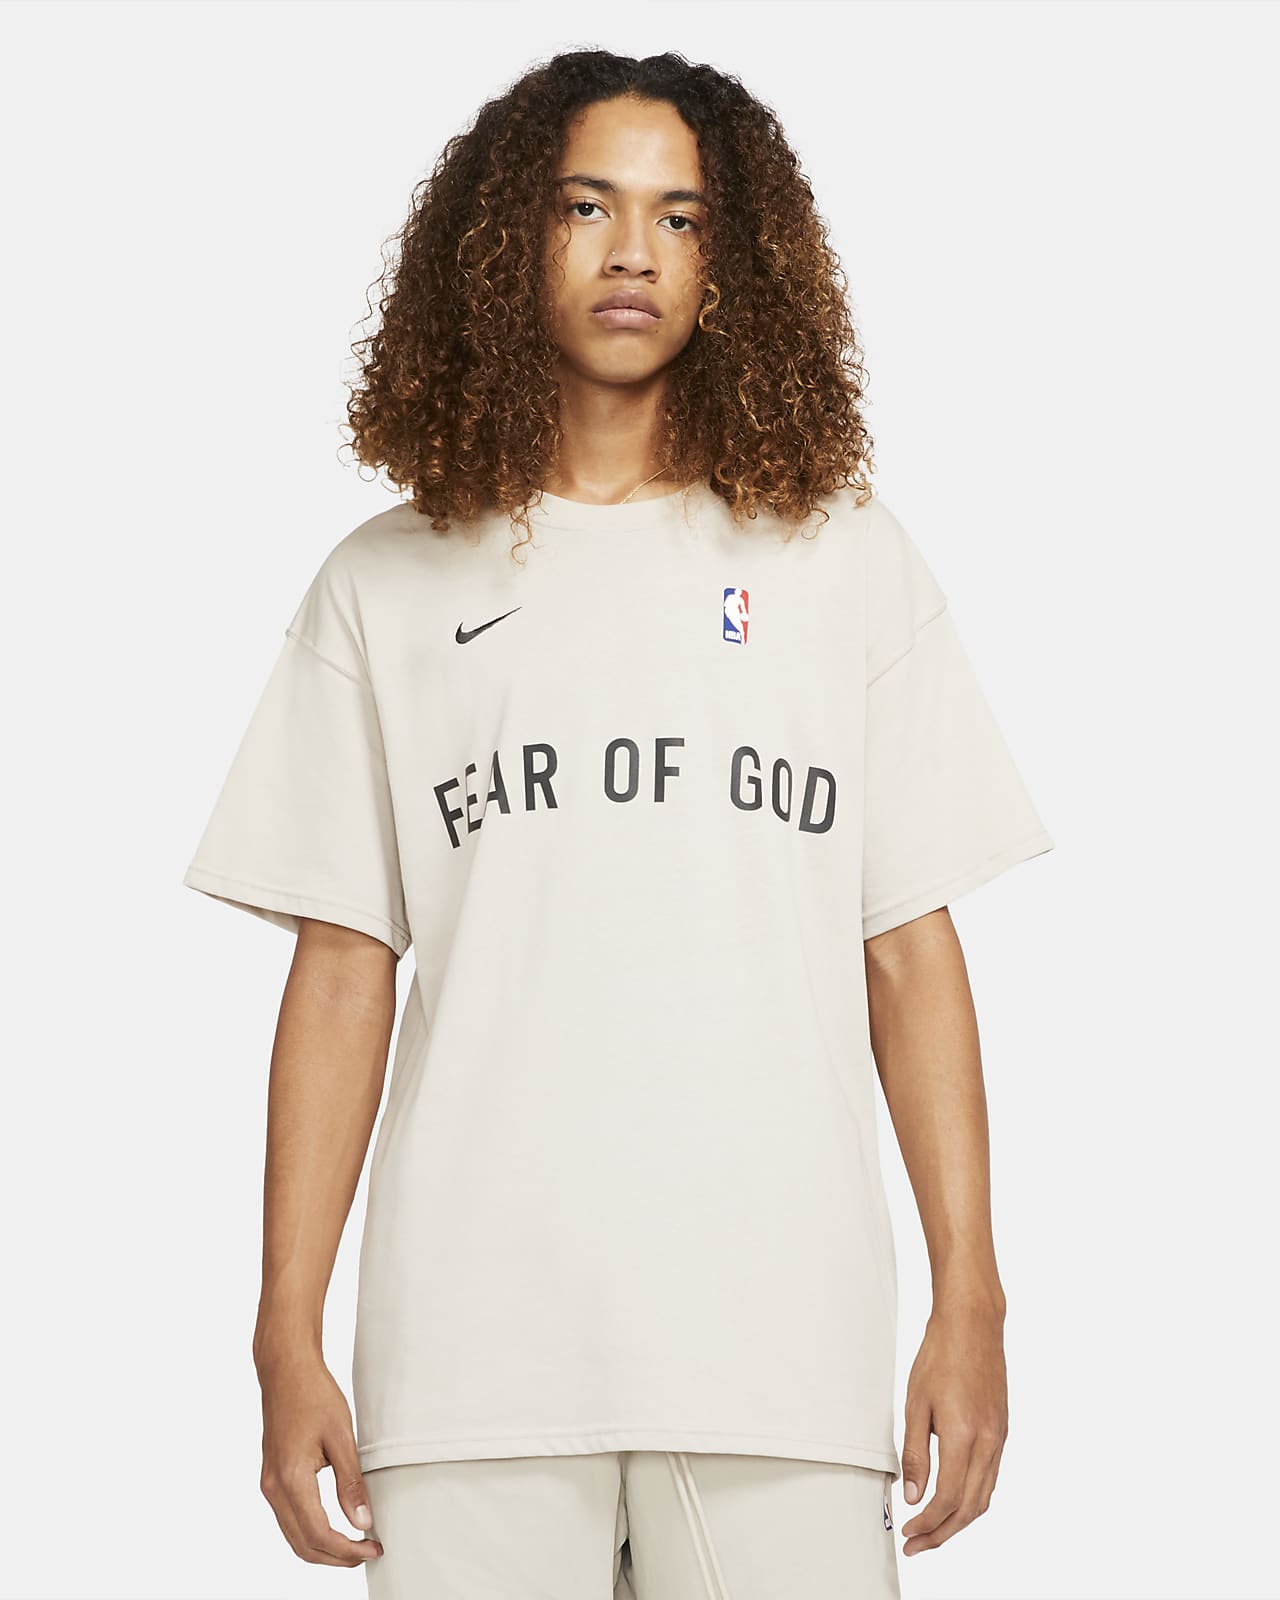 nike fear of god t shirt